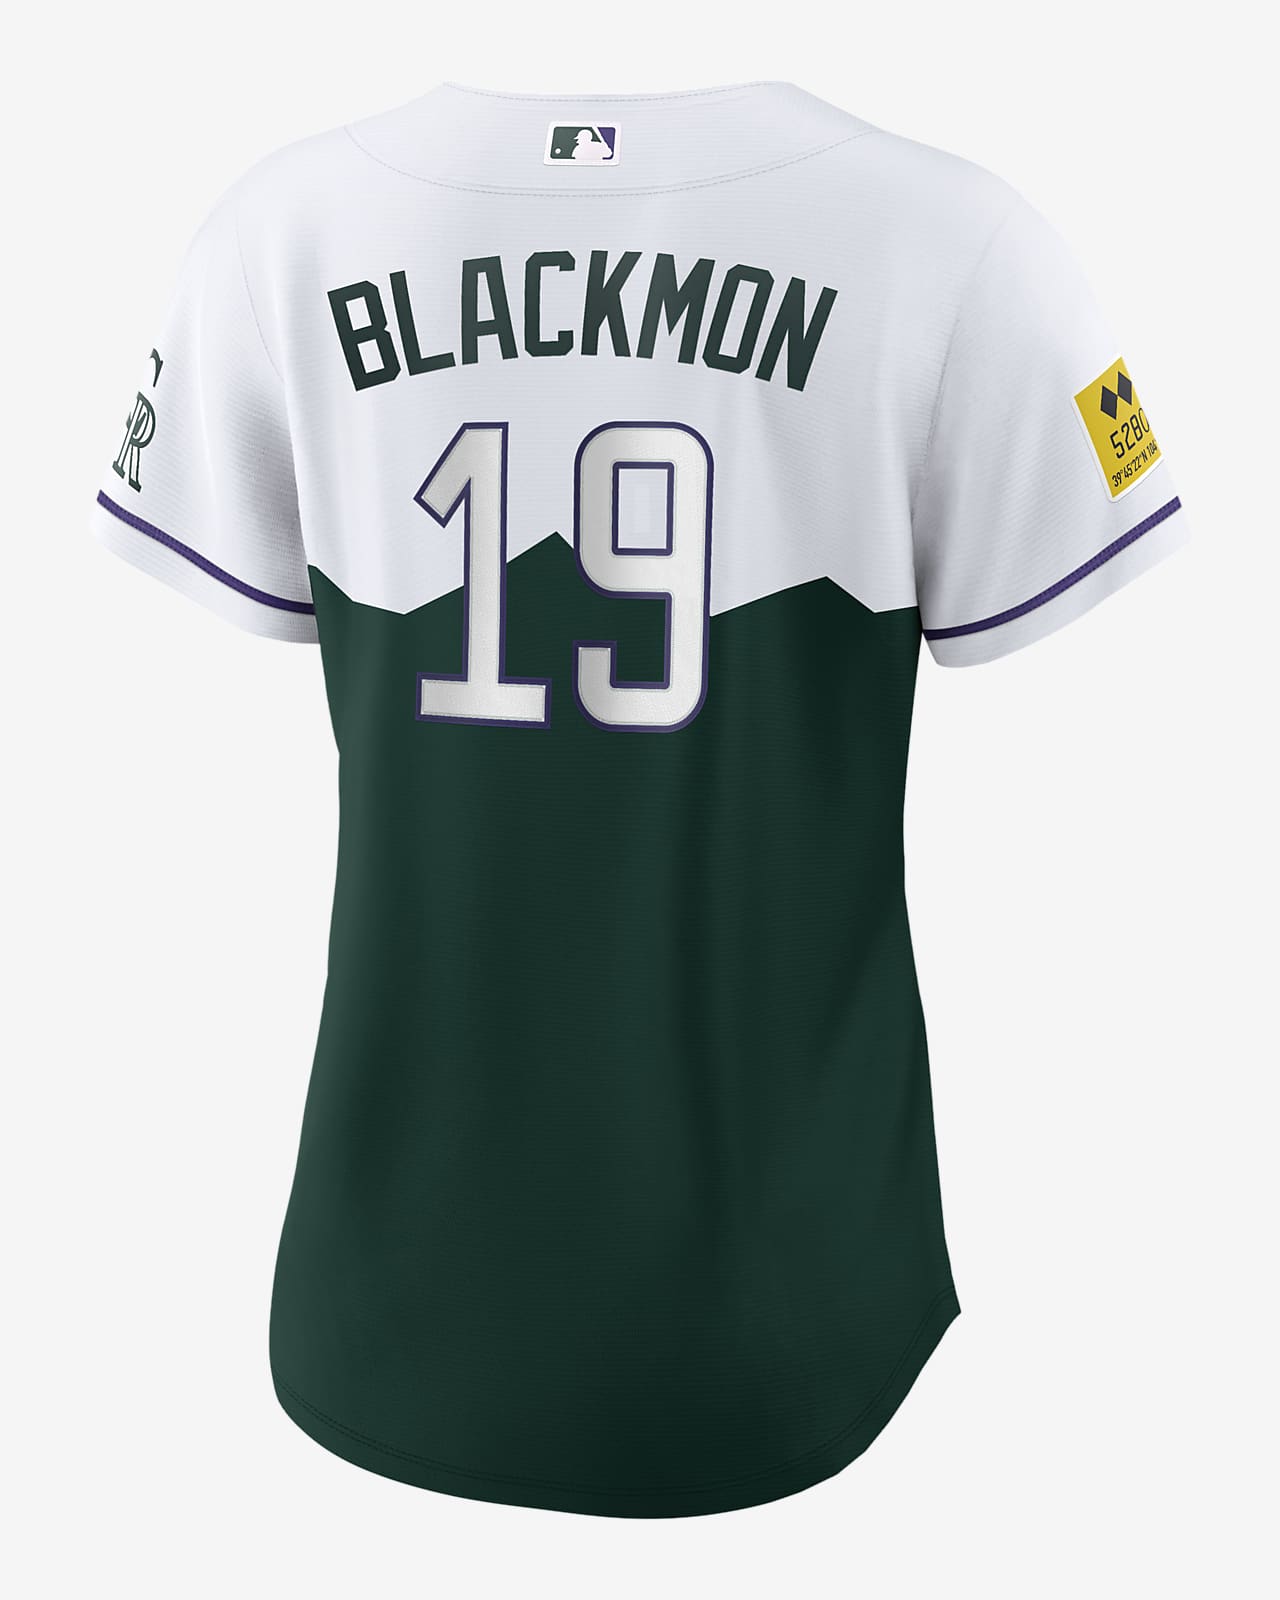 MLB Colorado Rockies City Connect (Charlie Blackmon) Women's Replica  Baseball Jersey